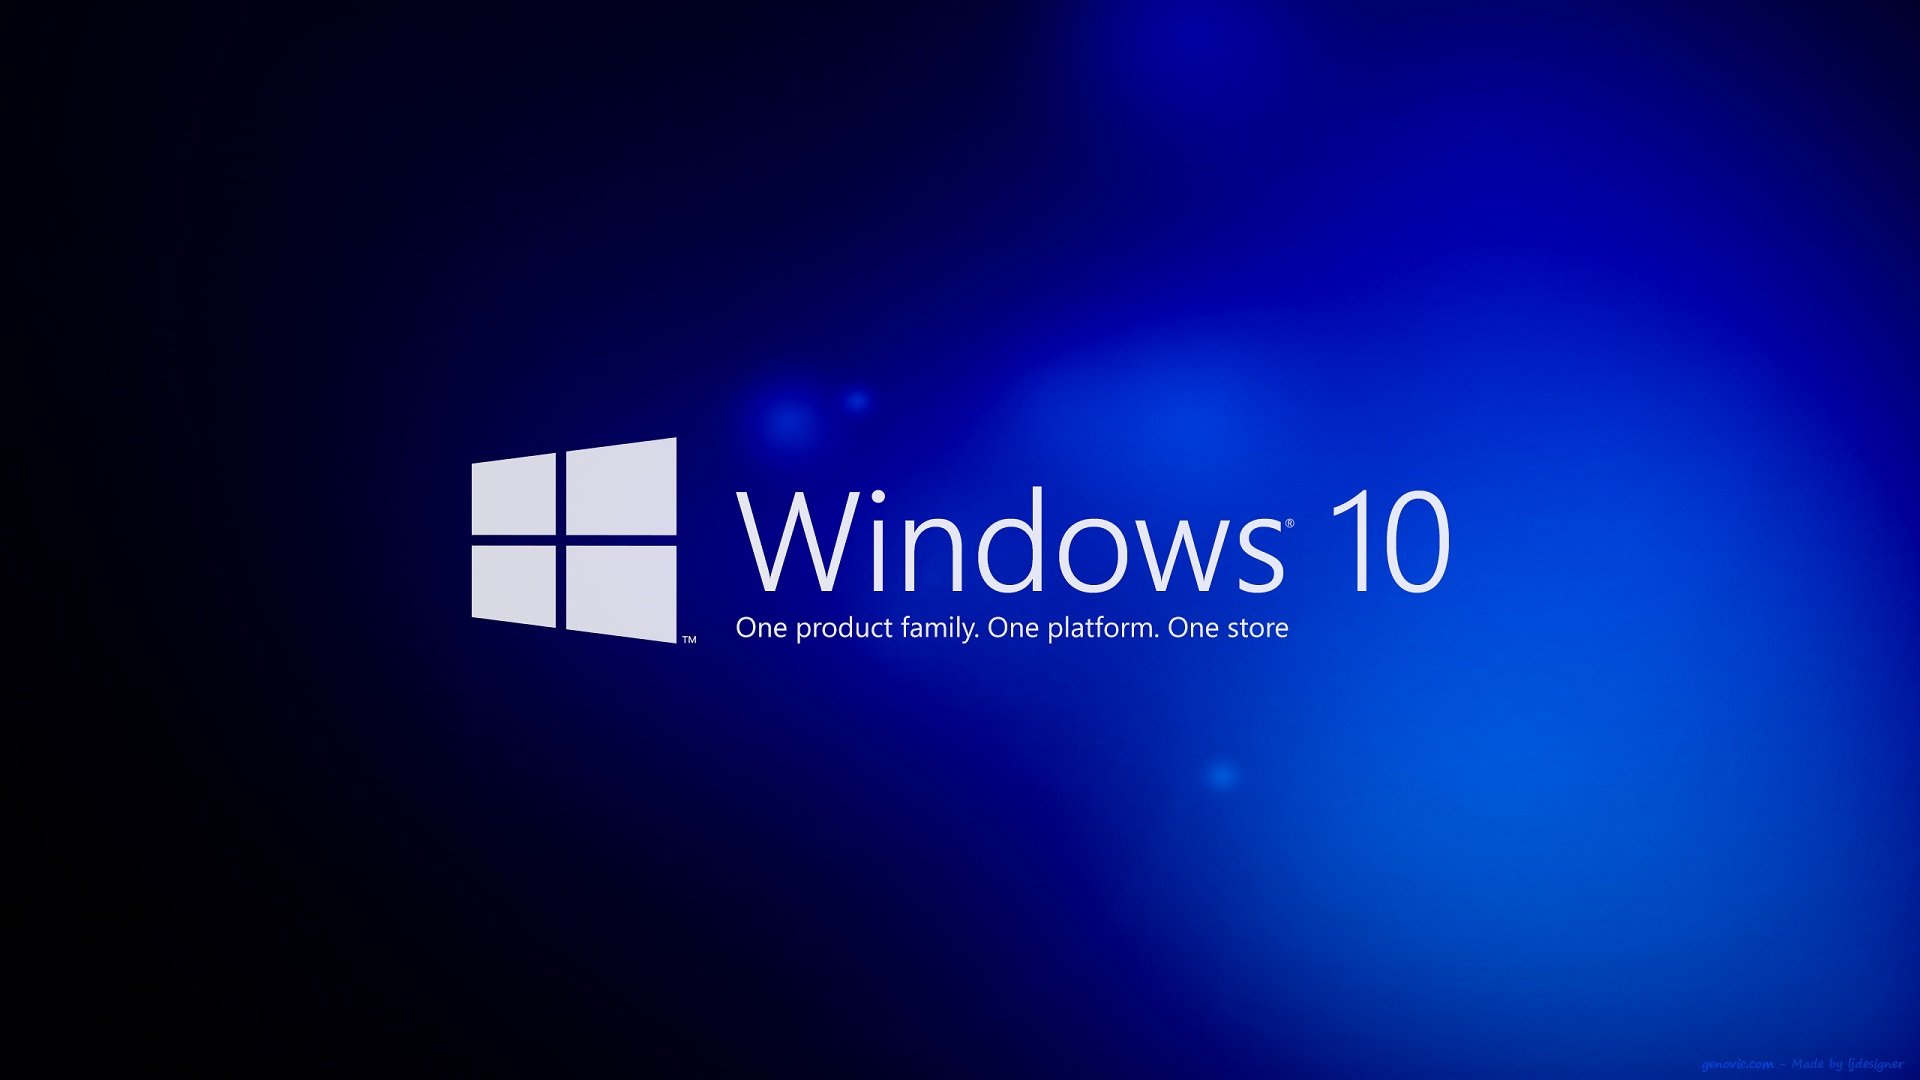 Windows 10 Wallpapers 1920x1080